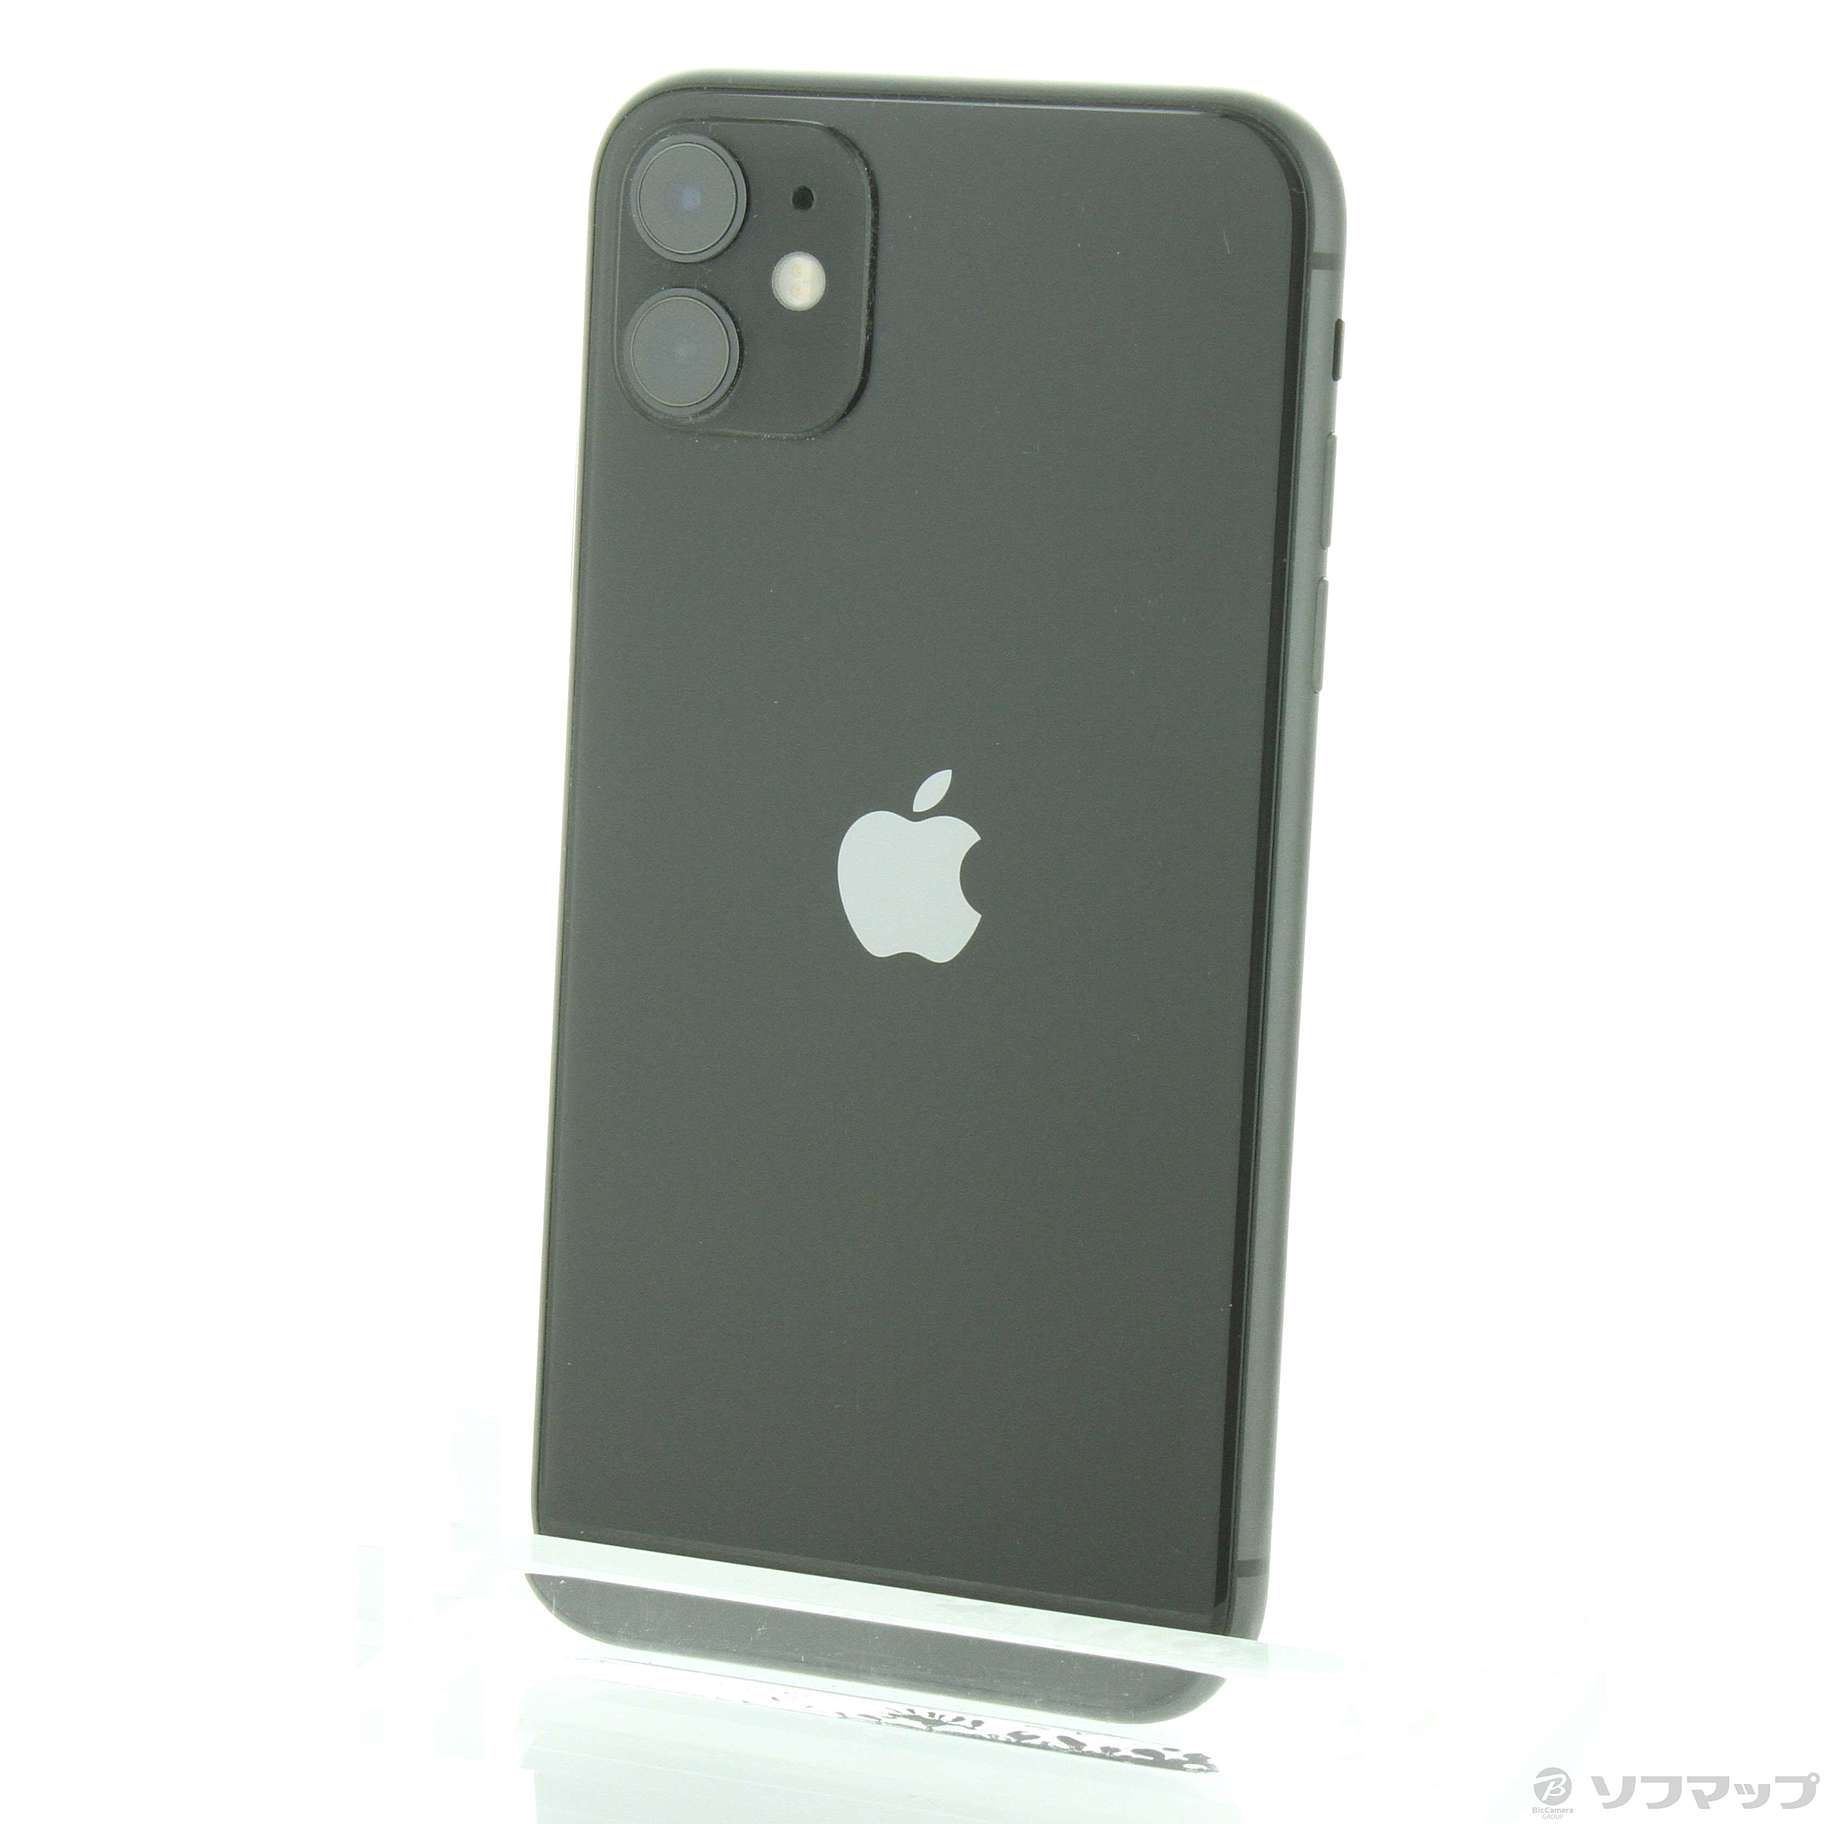 iPhone 11 ホワイト 64GB Apple au MWLU2J/A - www.sorbillomenu.com